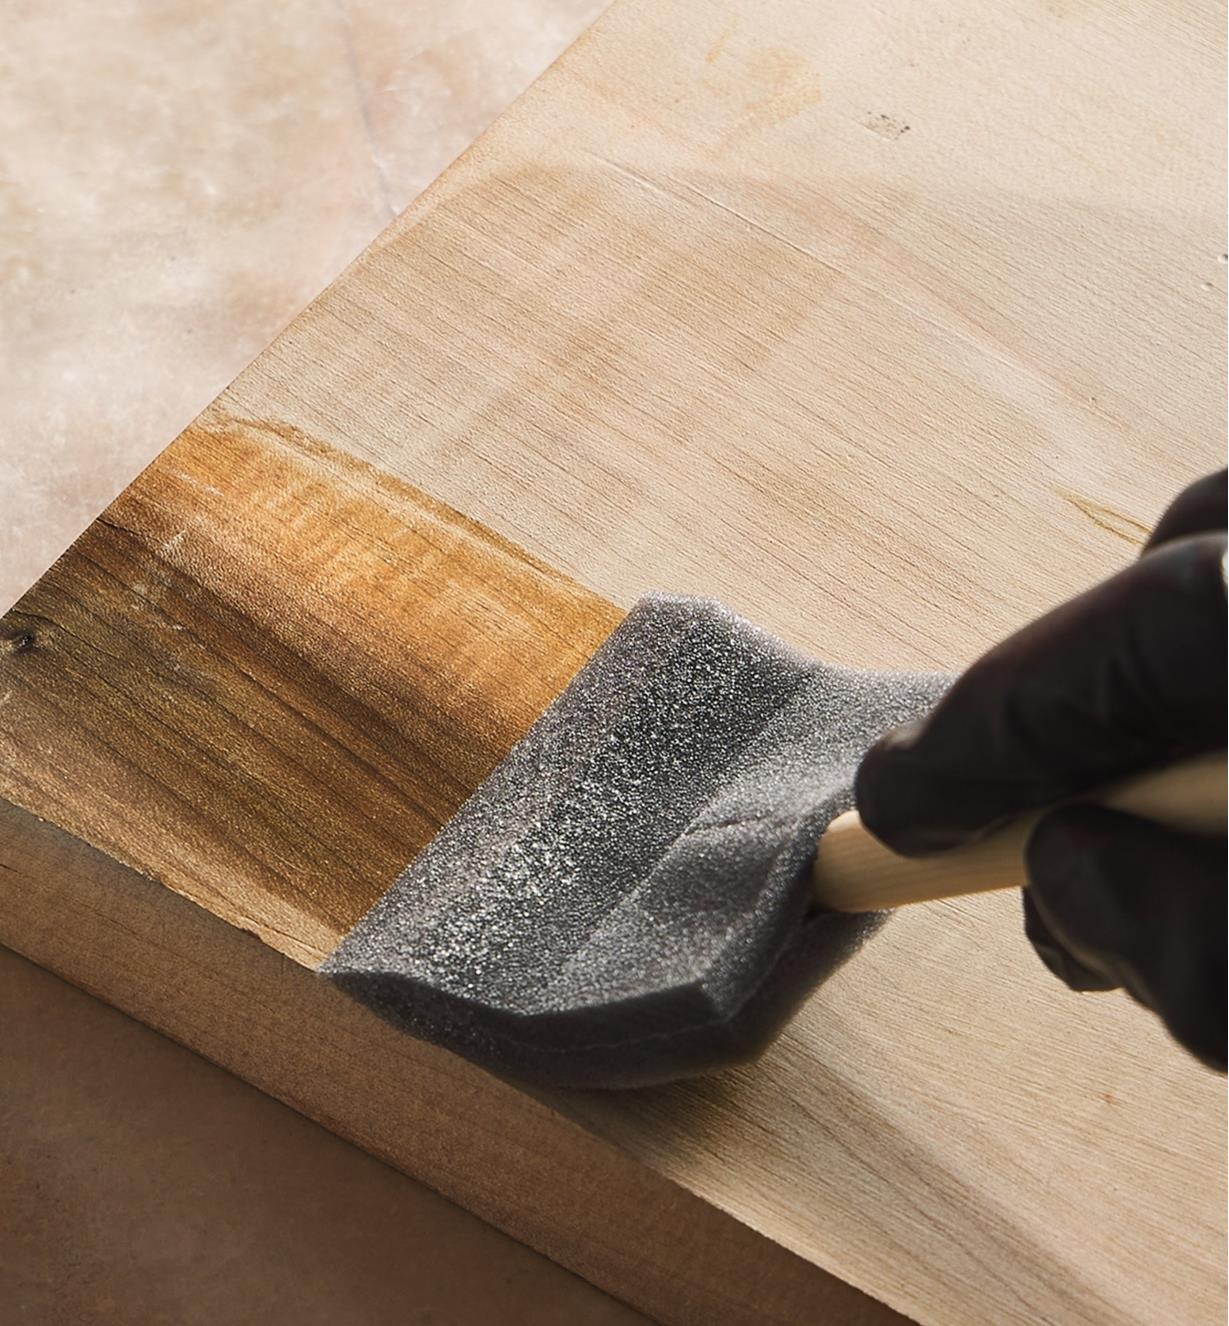 Applying wood bleach to a board using a foam brush